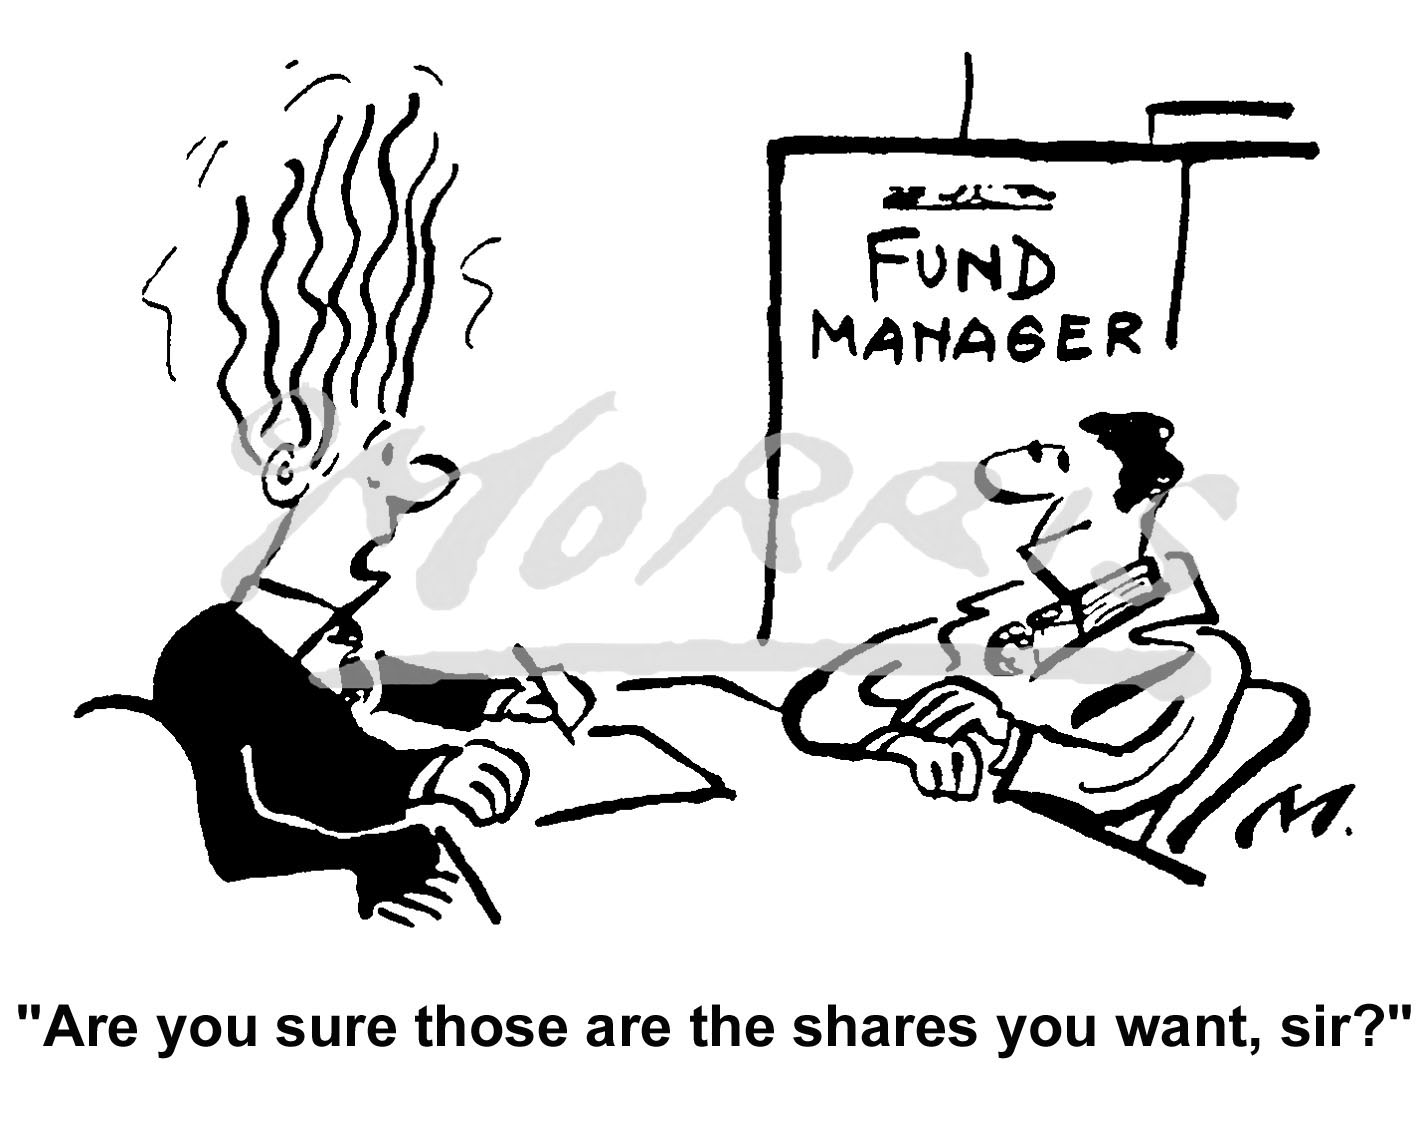 Shares cartoon, Financial cartoon, Fund Manager cartoon